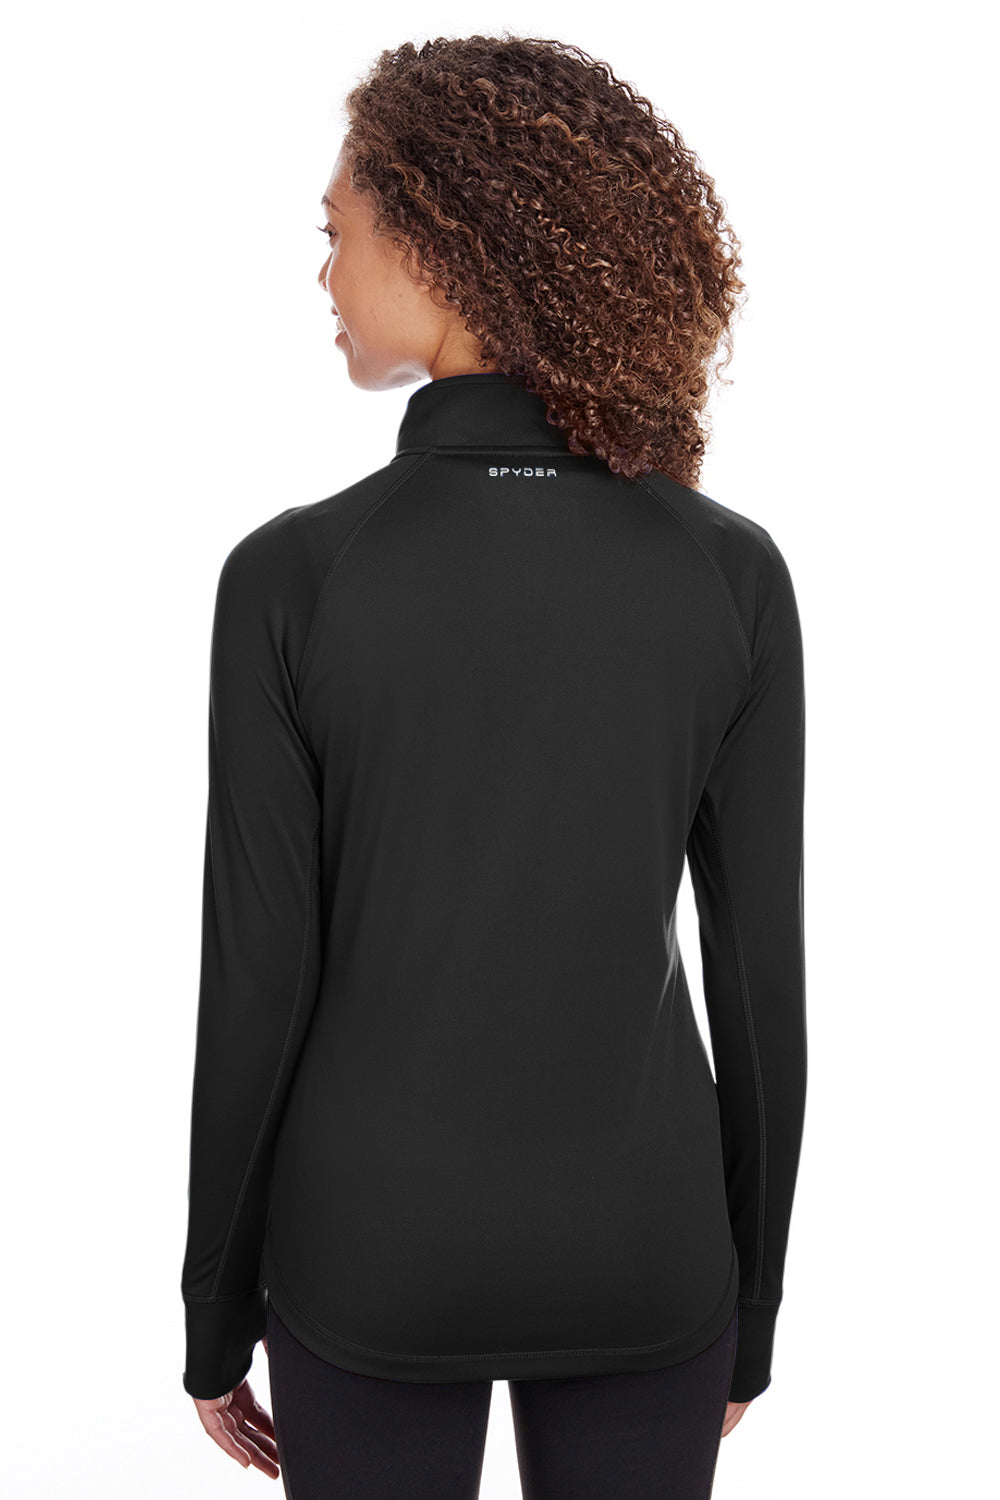 Spyder S16798 Womens Freestyle 1/4 Zip Sweatshirt Black Back